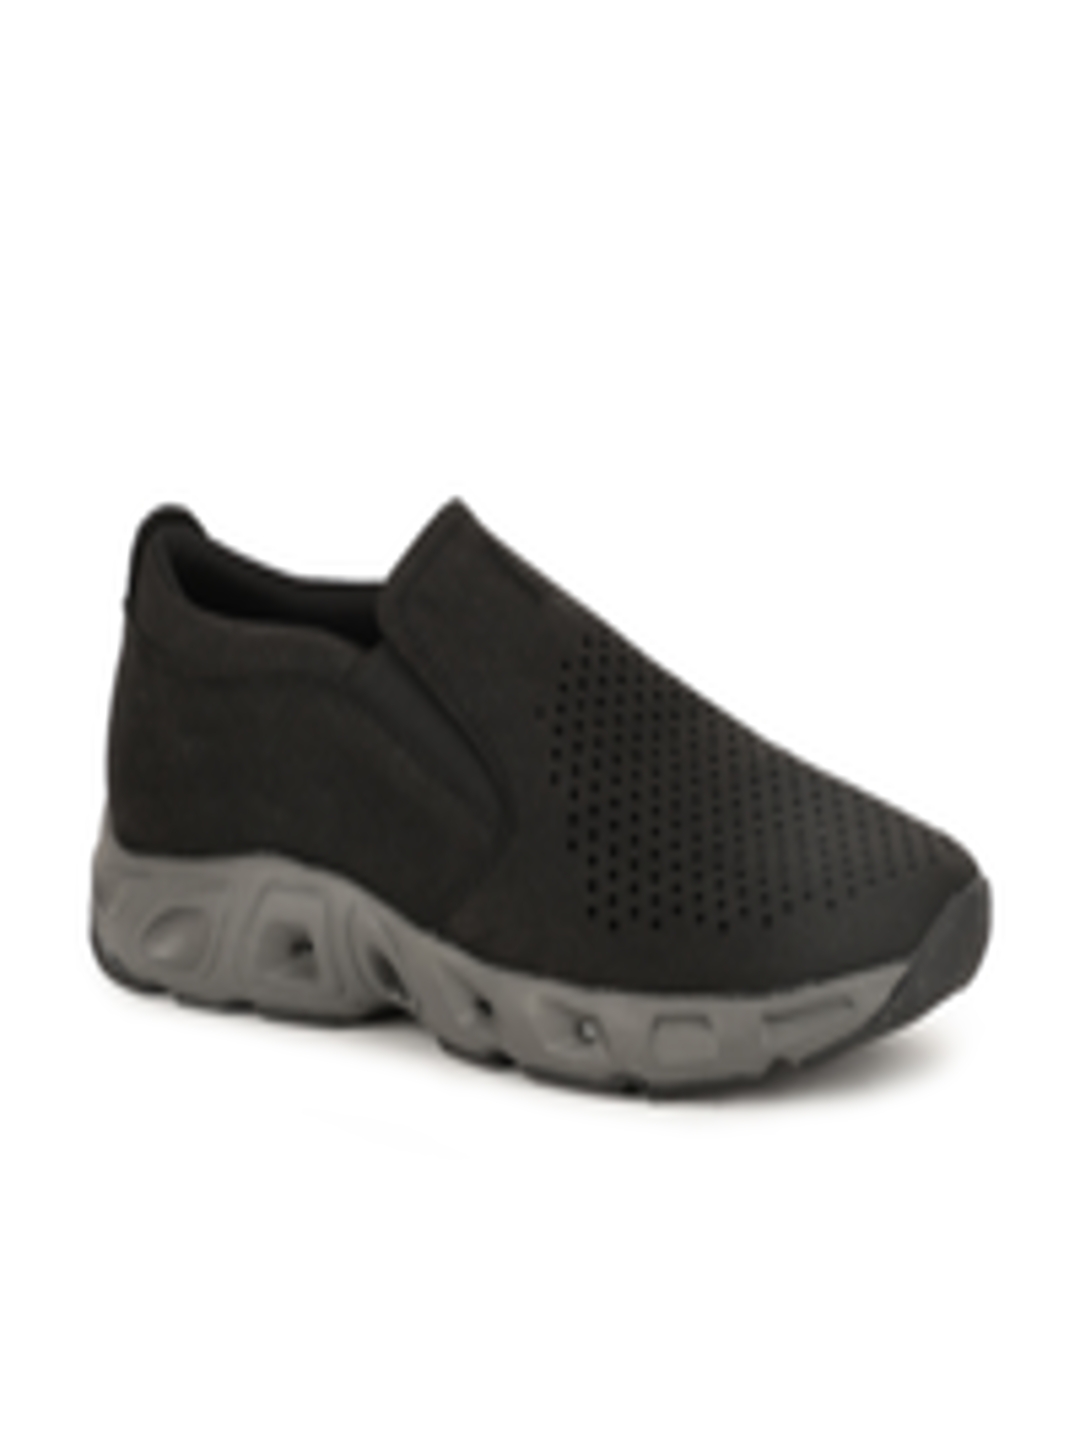 Buy Weinbrenner Men Black Slip On Sneakers - Casual Shoes for Men ...